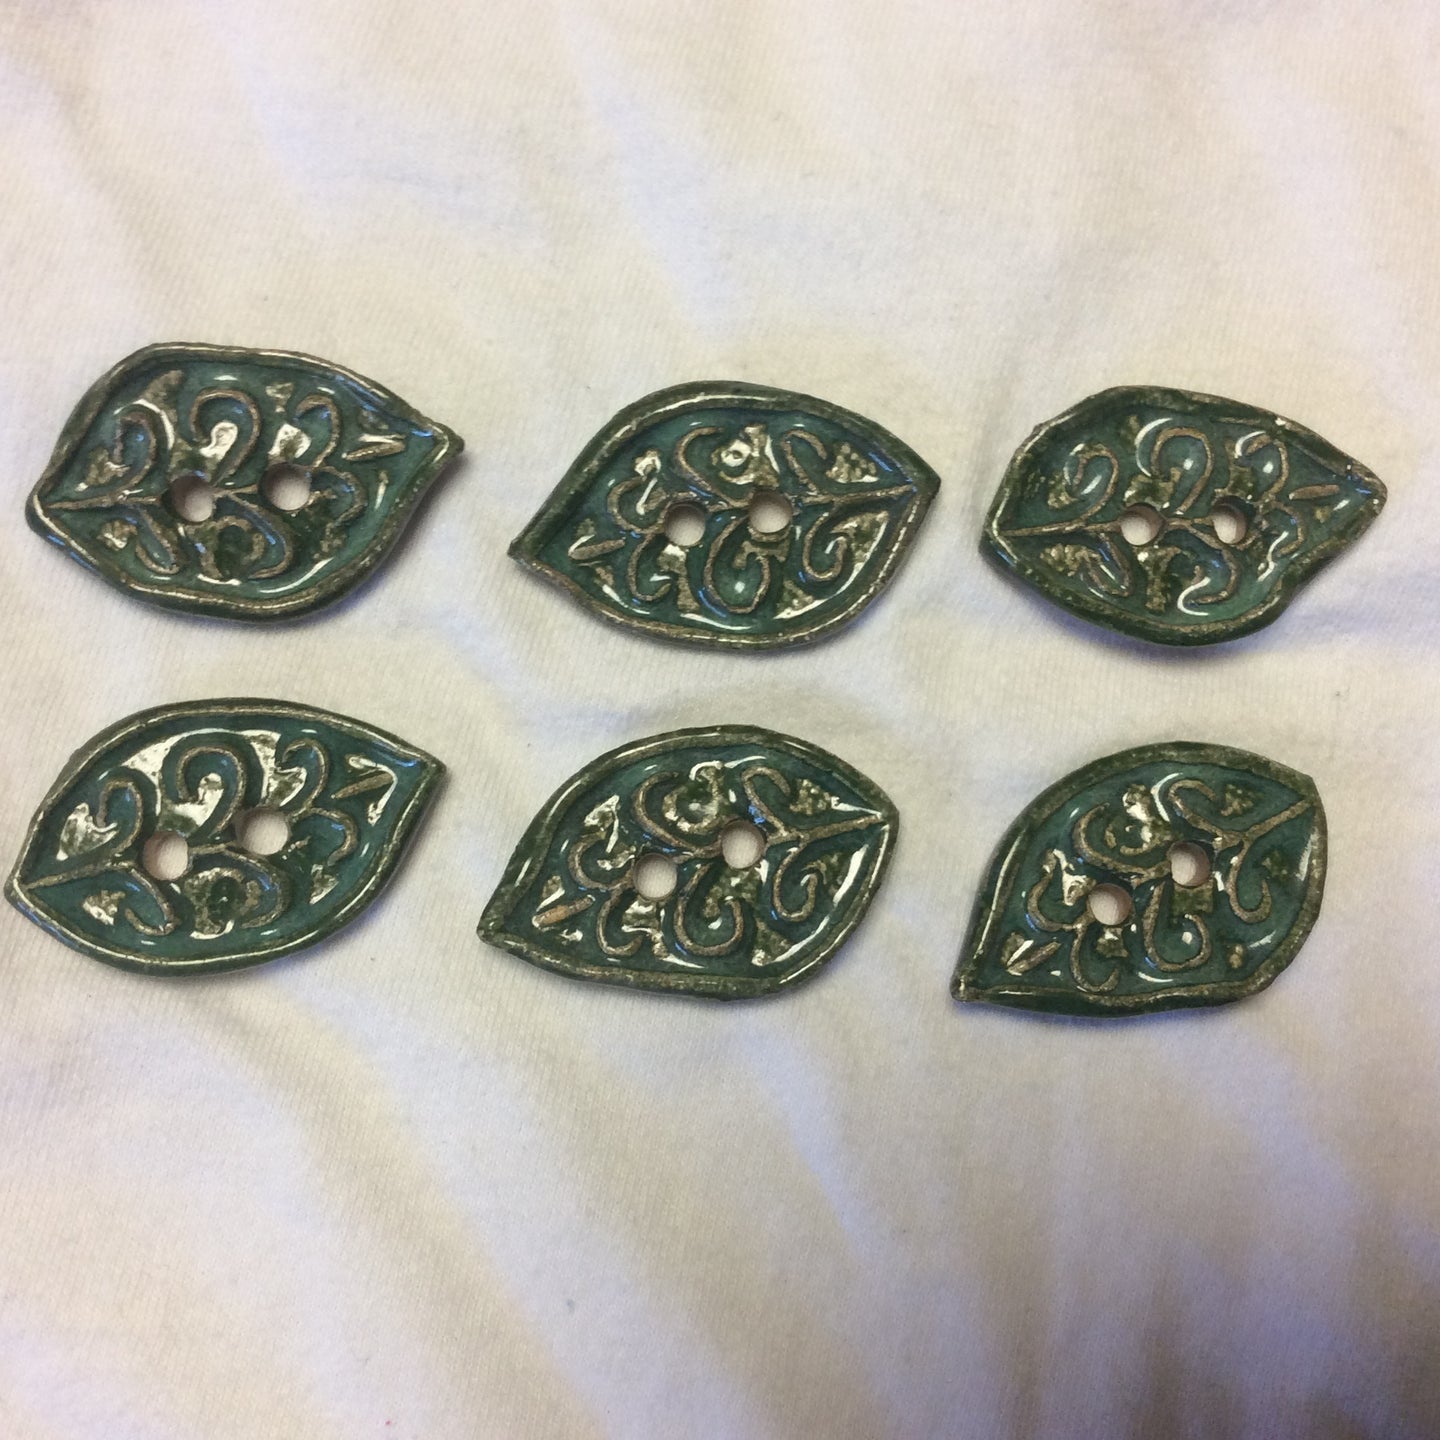 6 Ceramic Leaf buttons